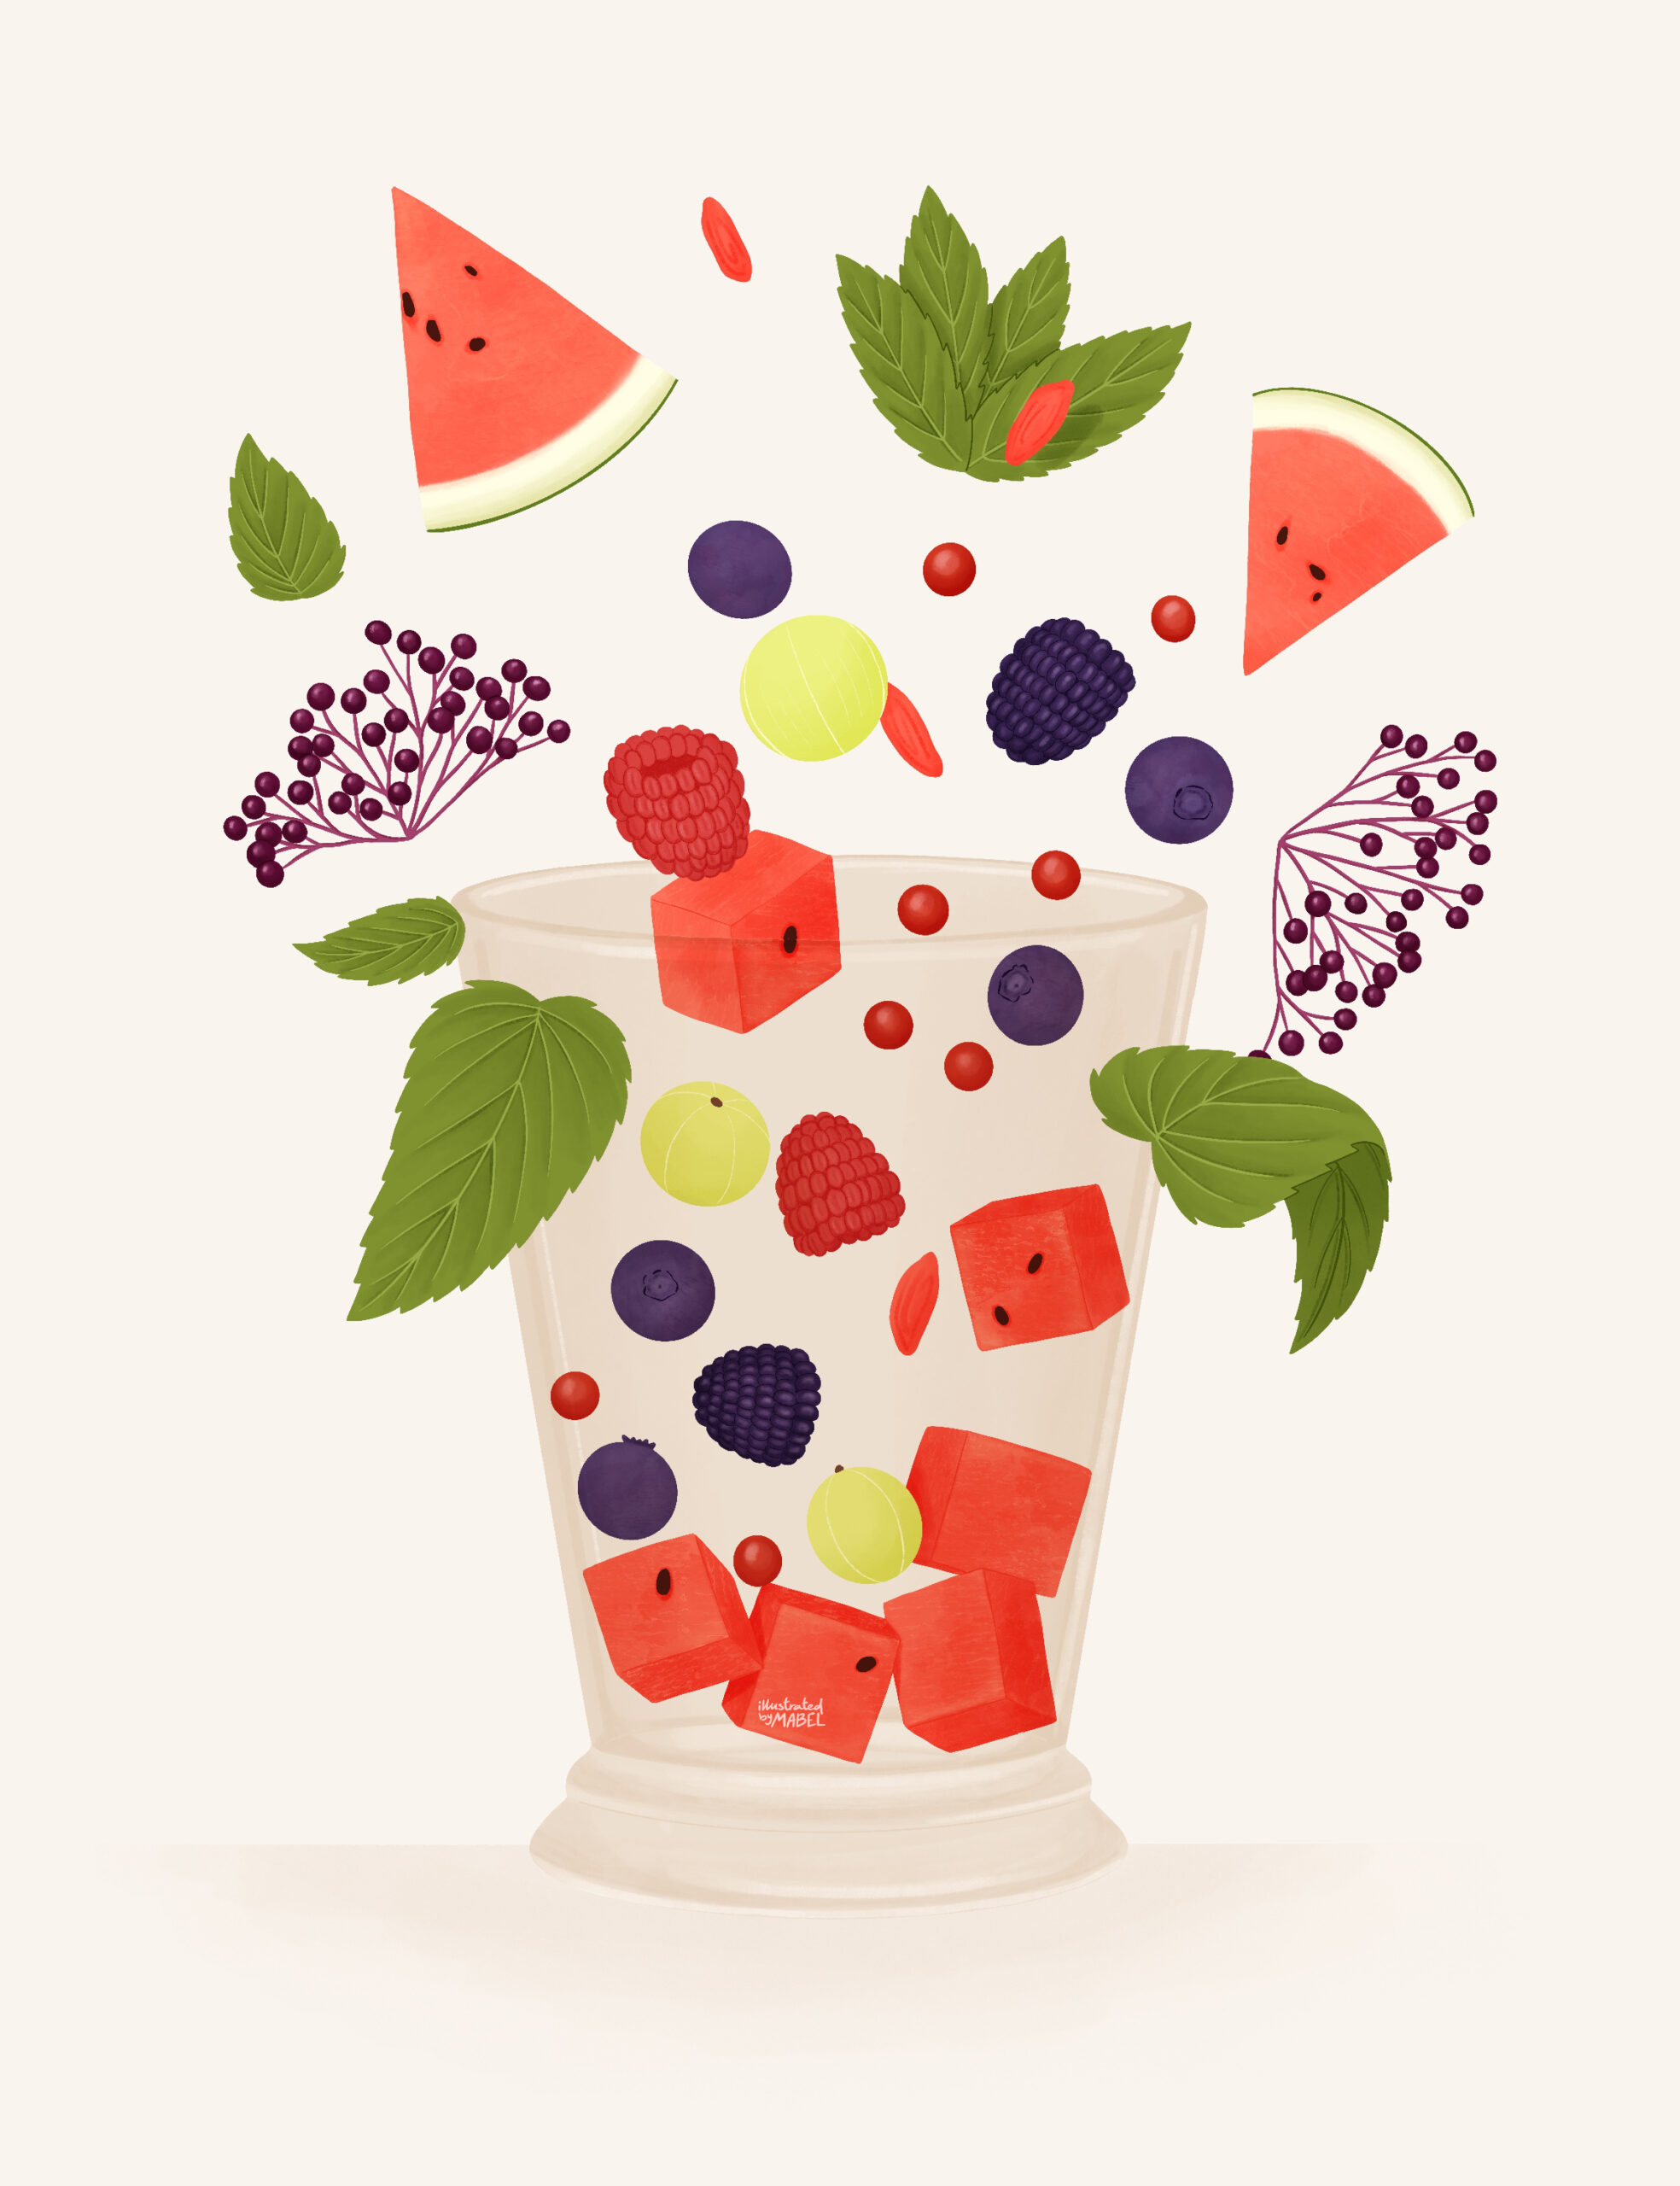 Summer Fruit Illustration